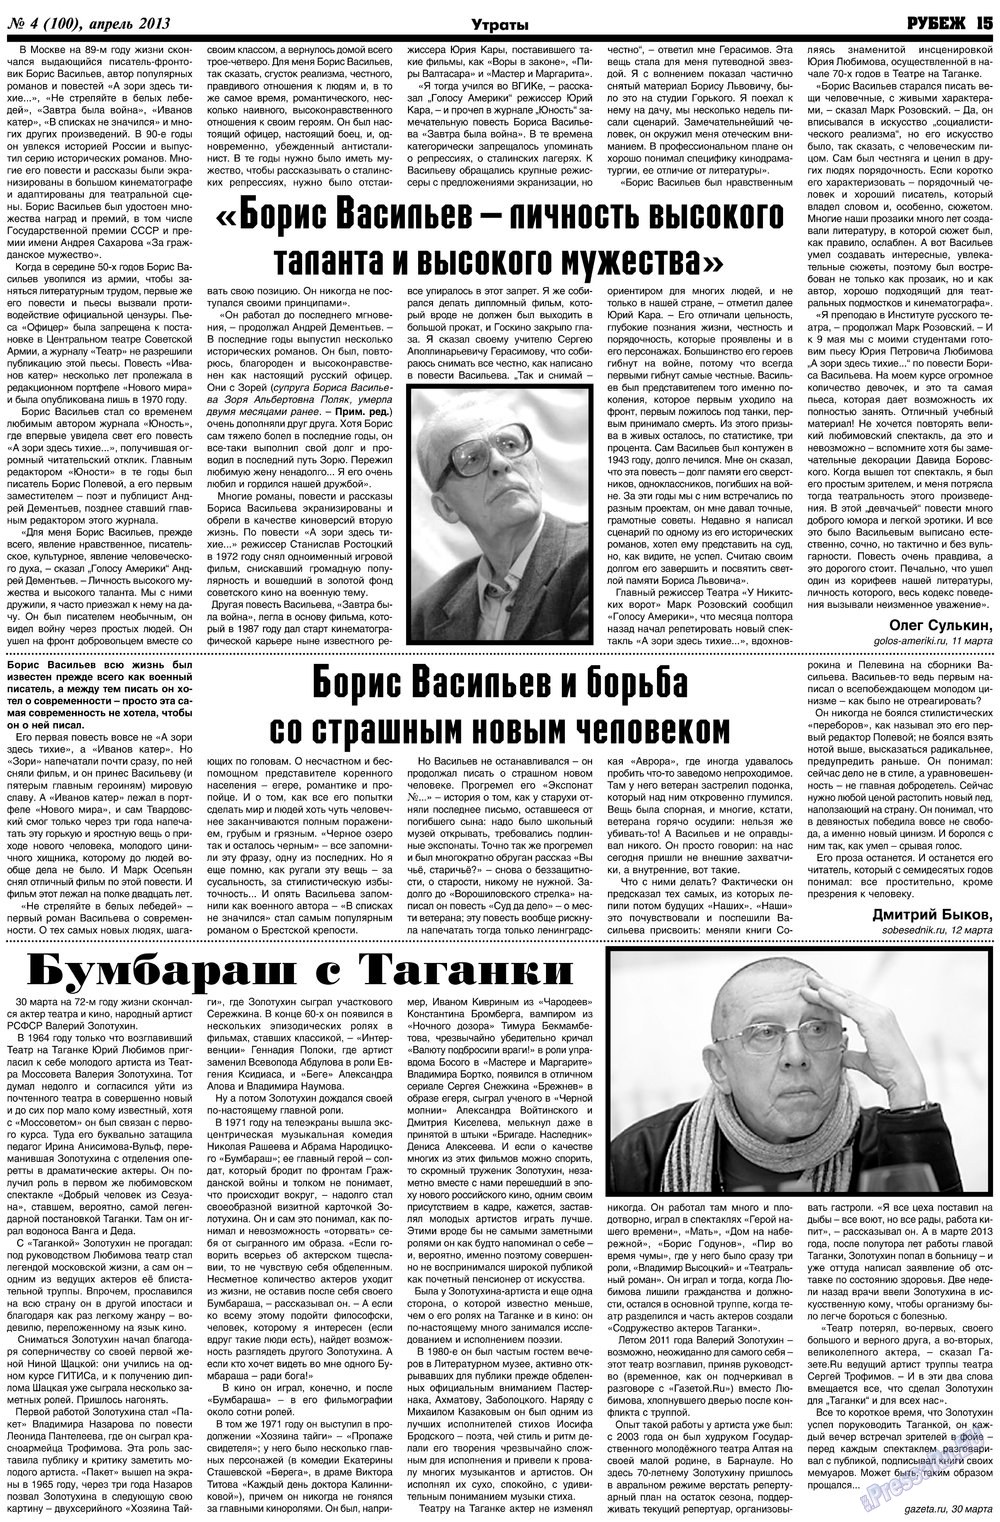 Рубеж, газета. 2013 №4 стр.15